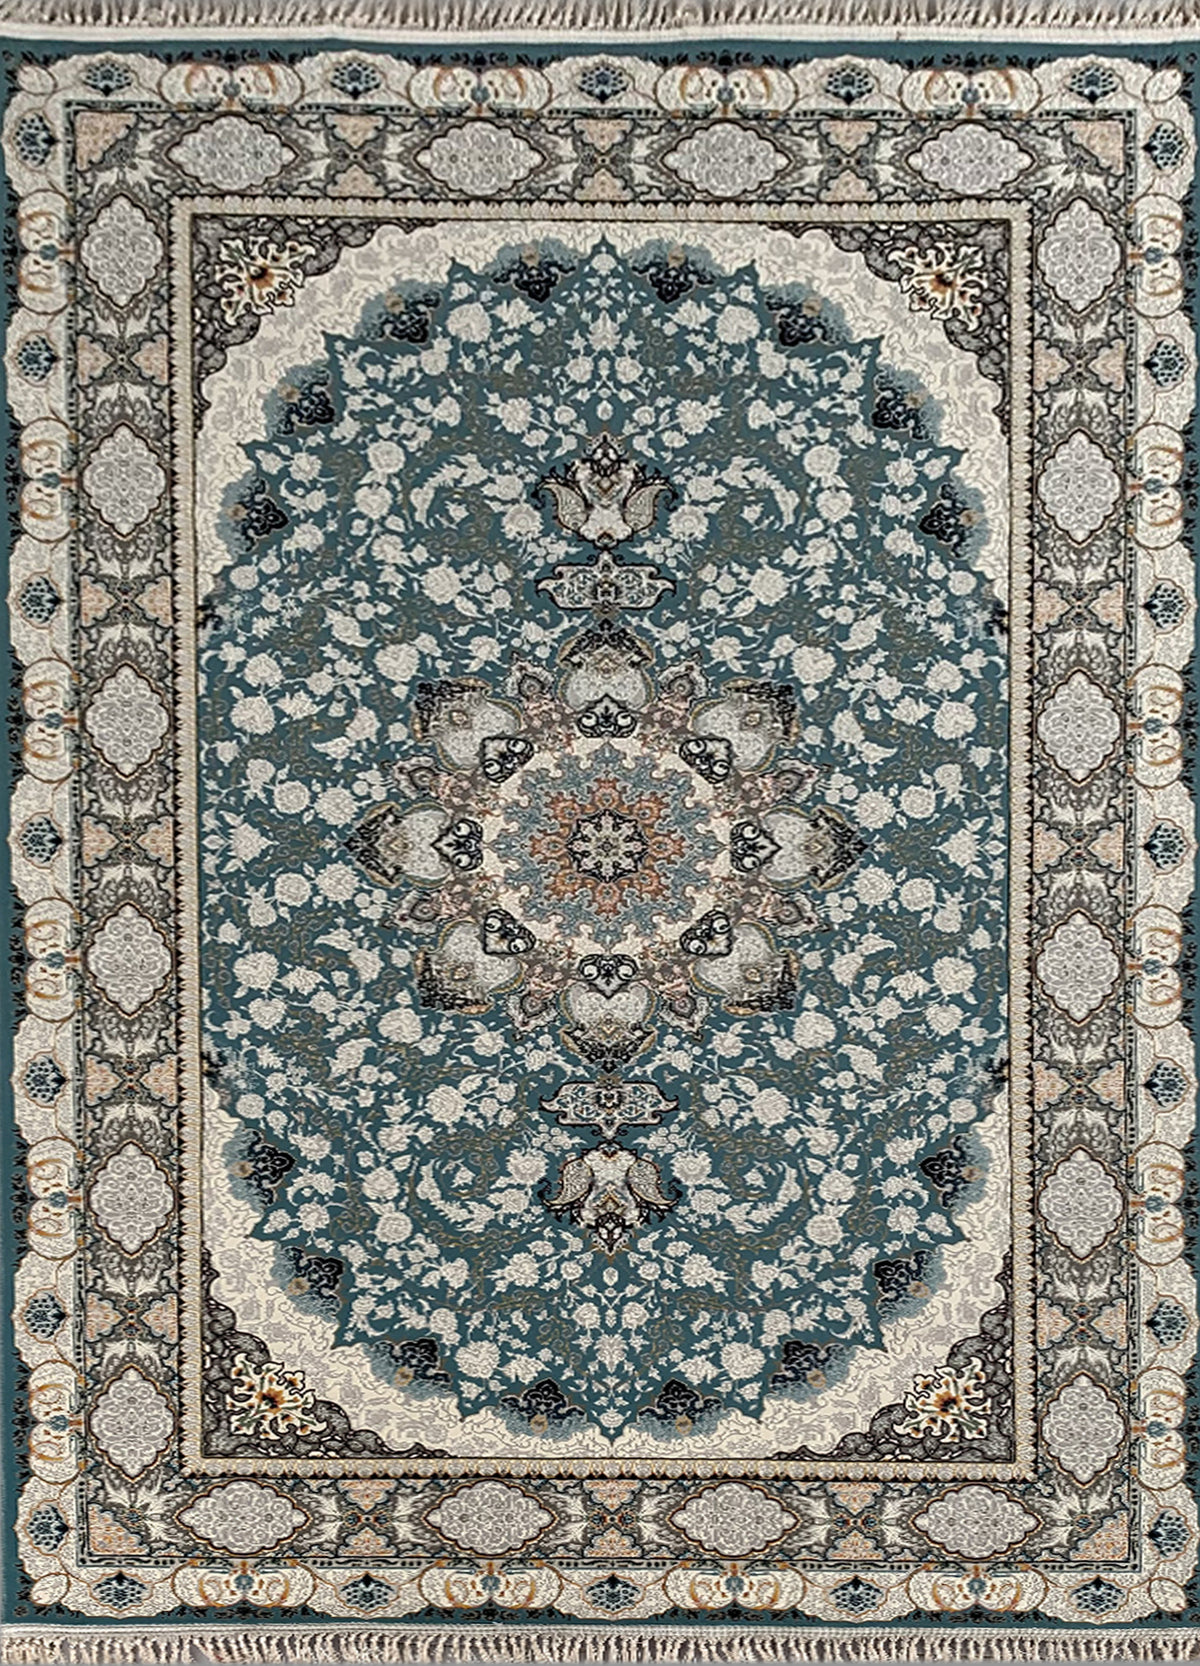 Rugslane Irani Turquoise Ground Black Border Tradition Design High Quality Super Premium Silk Carpet 5ft X 7.6ft